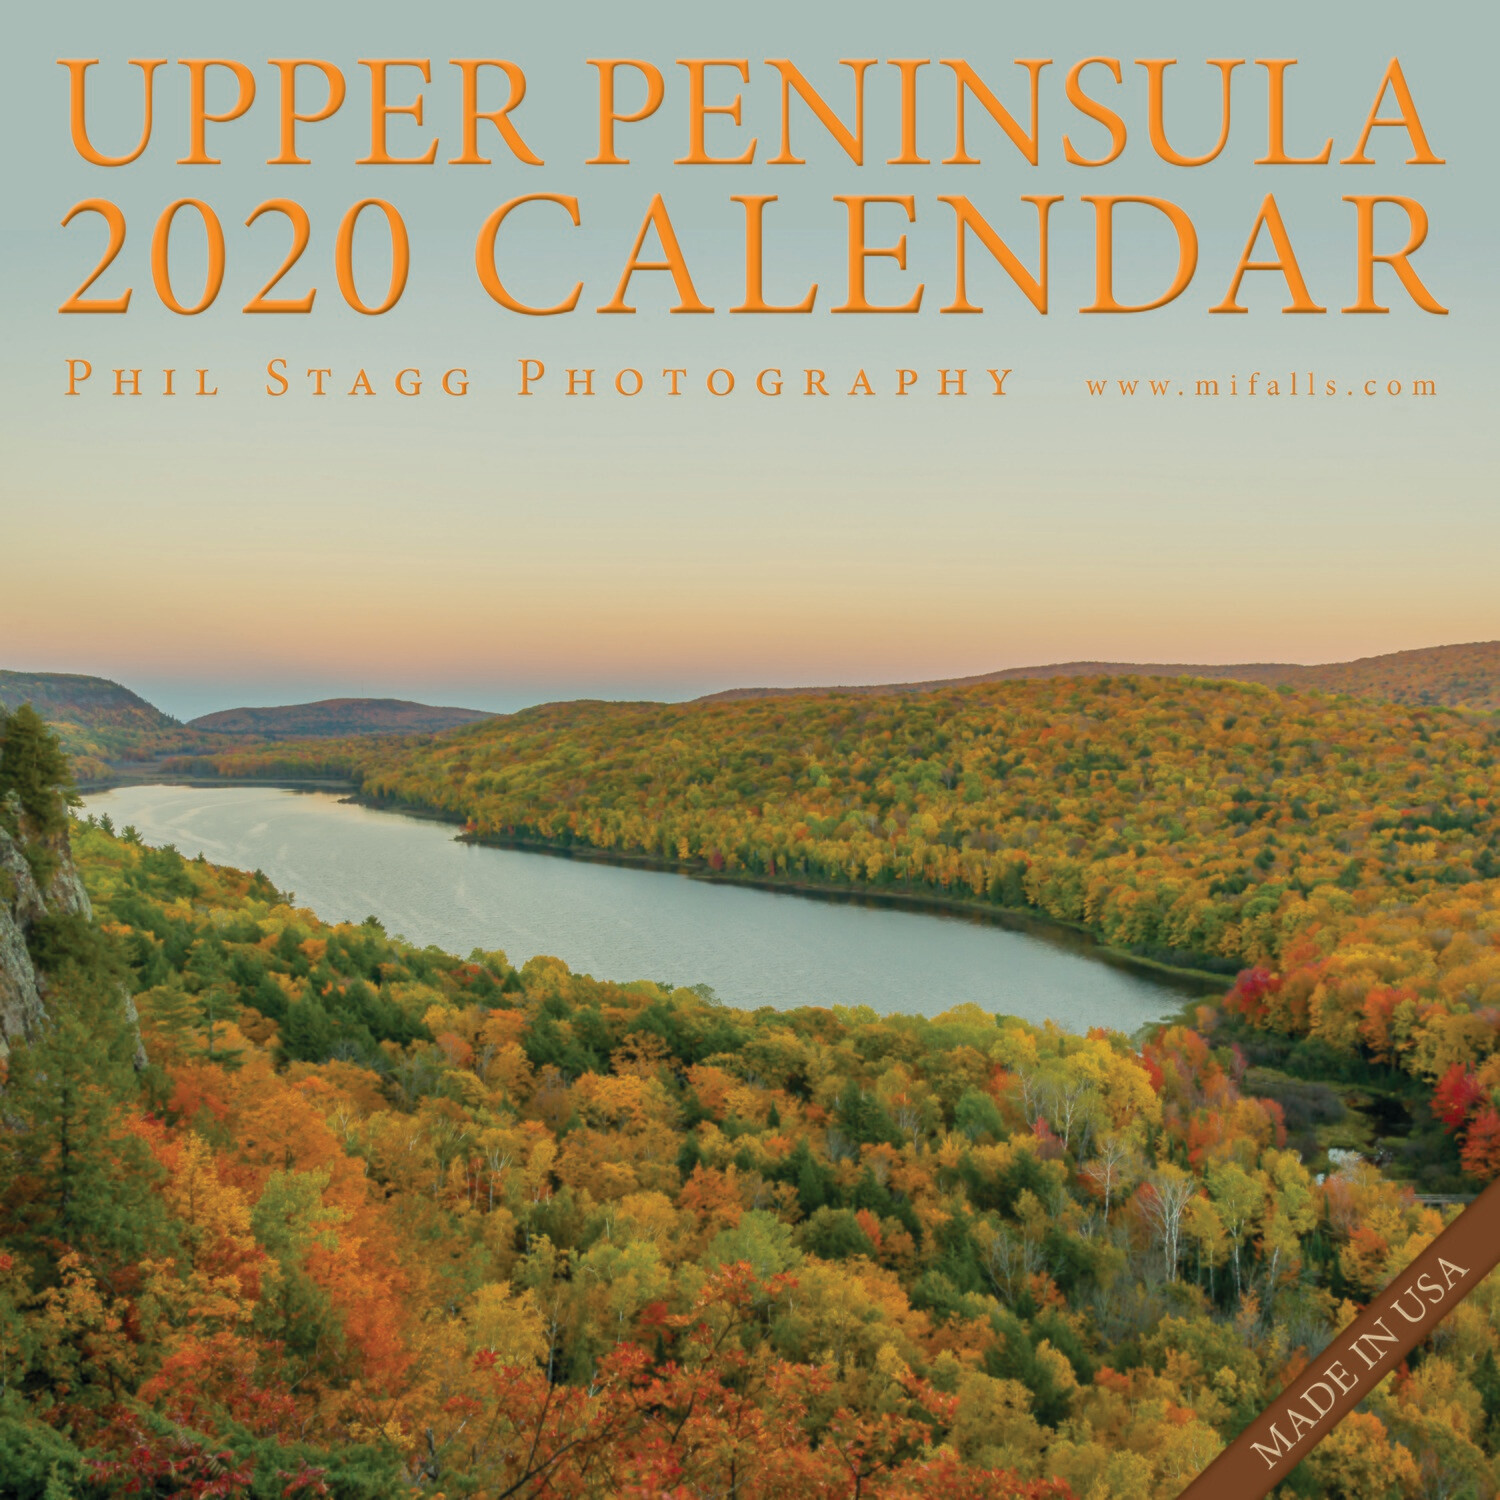 Upper Peninsula 2020 Calendar